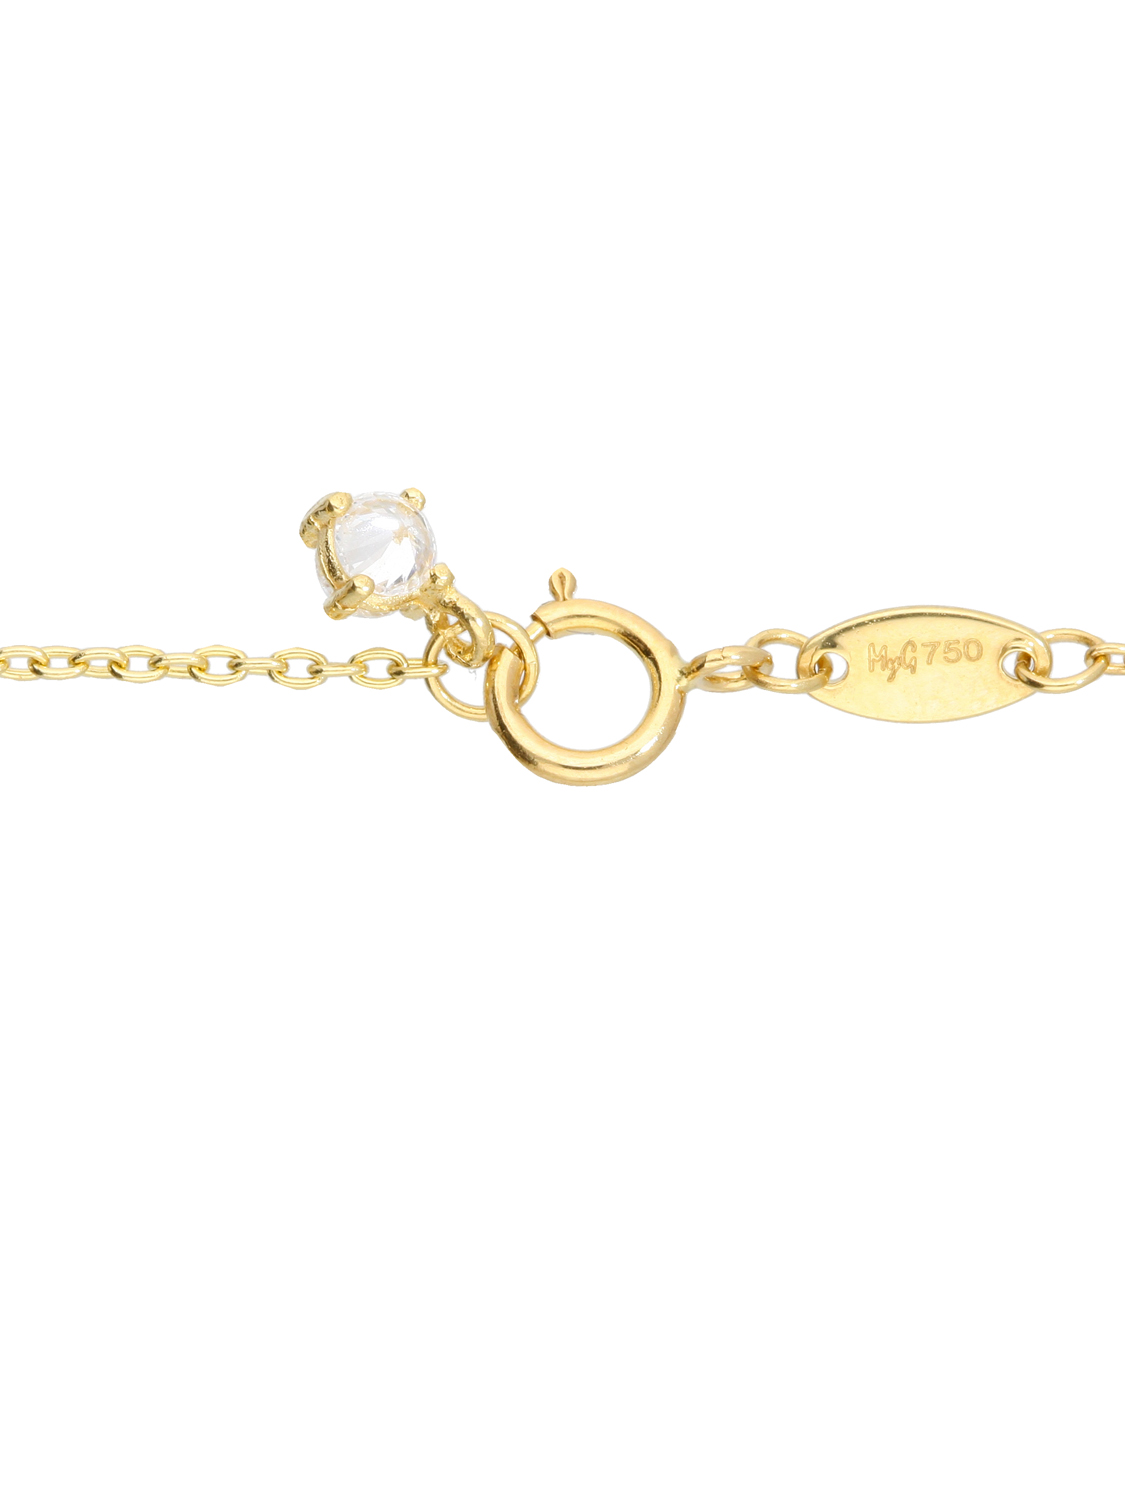 Amelie - Zirkonia Dreieck Armkette 375 Gold